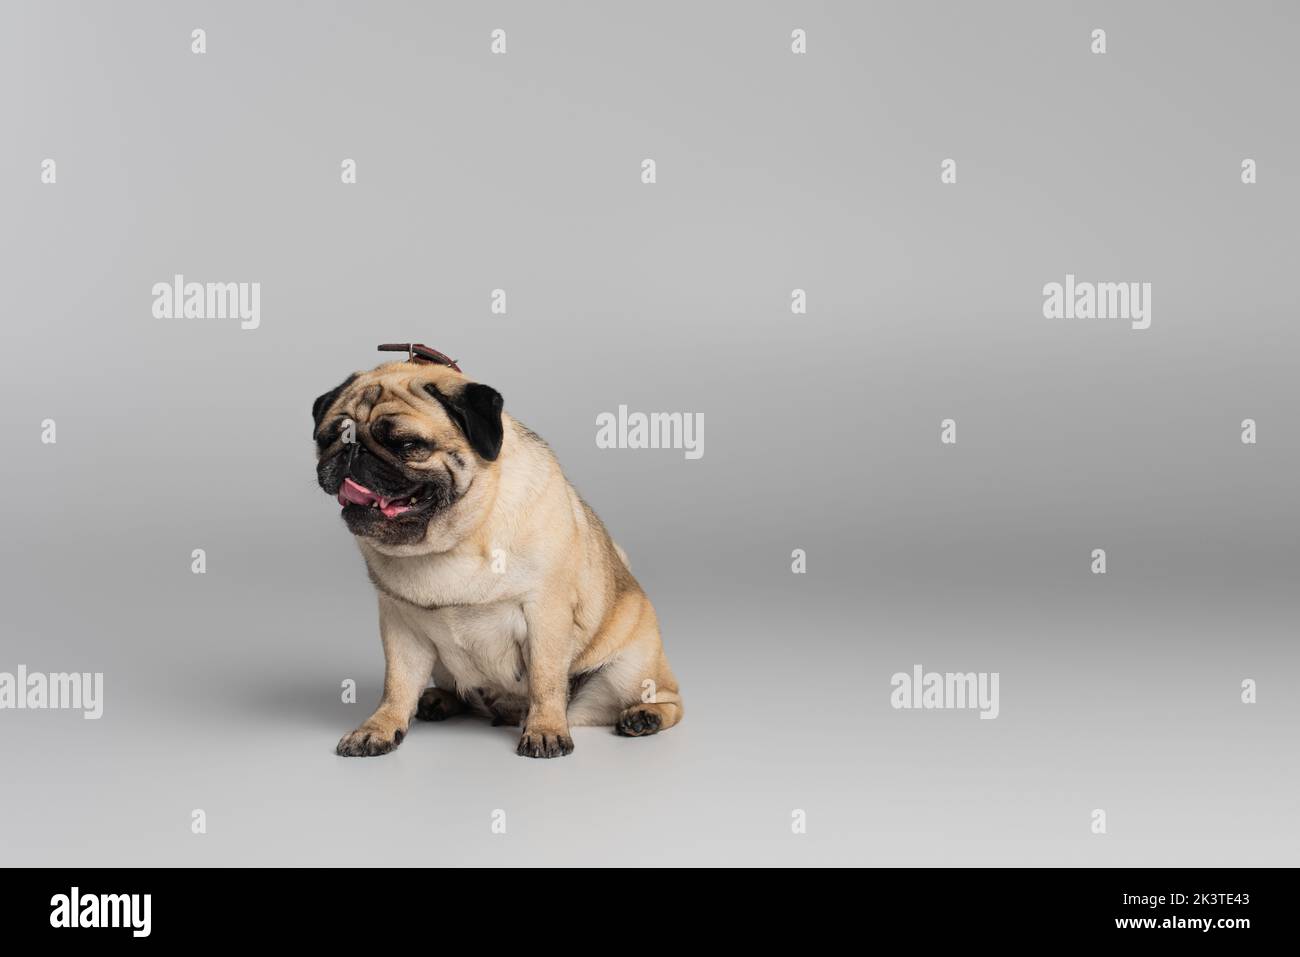 cute pug dog with wrinkles sitting on grey background,stock image Stock Photo